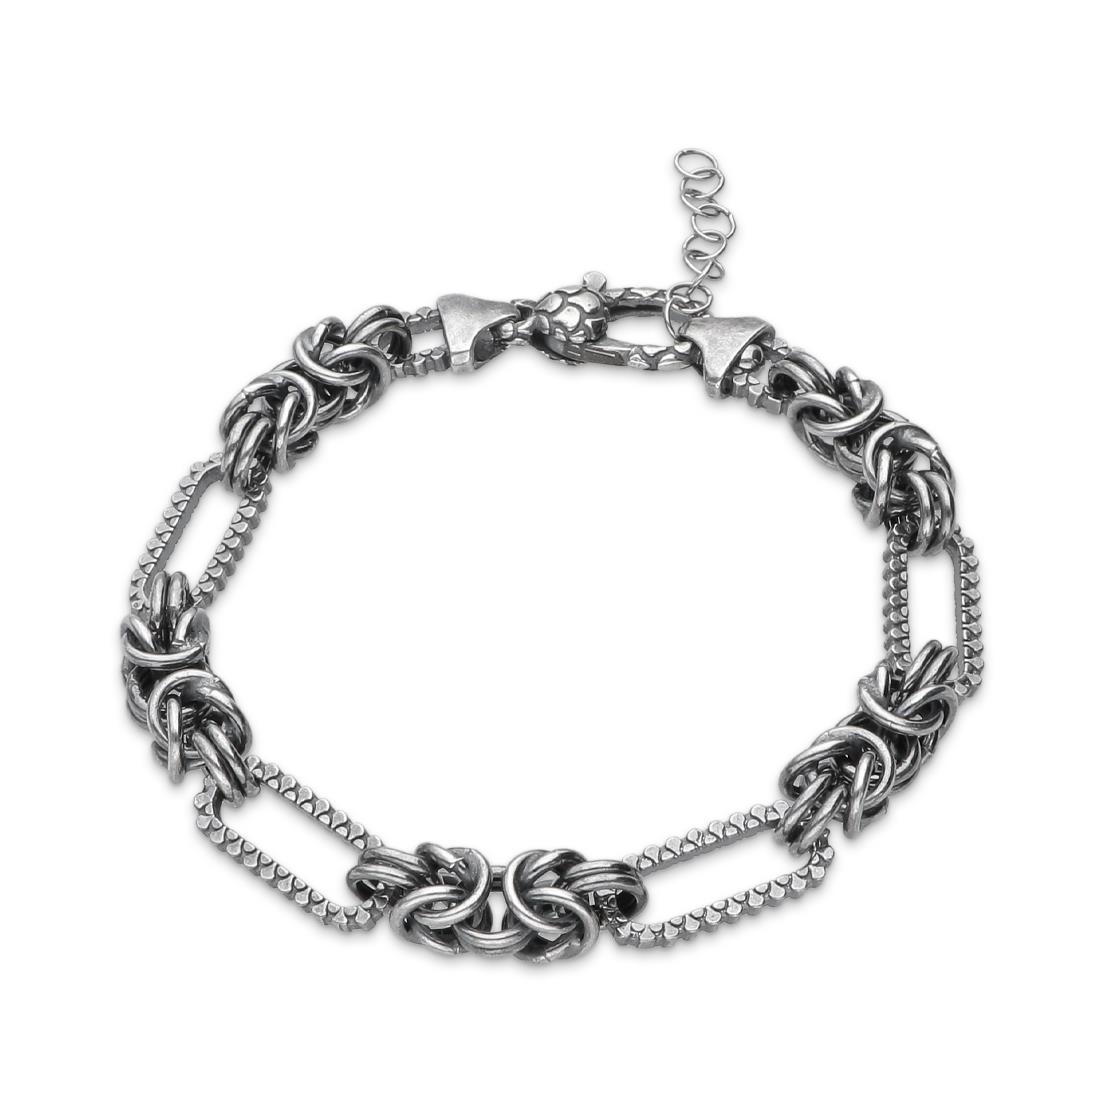 Men's silver bracelet with alternating link chain - ALFIERI & ST. JOHN 925